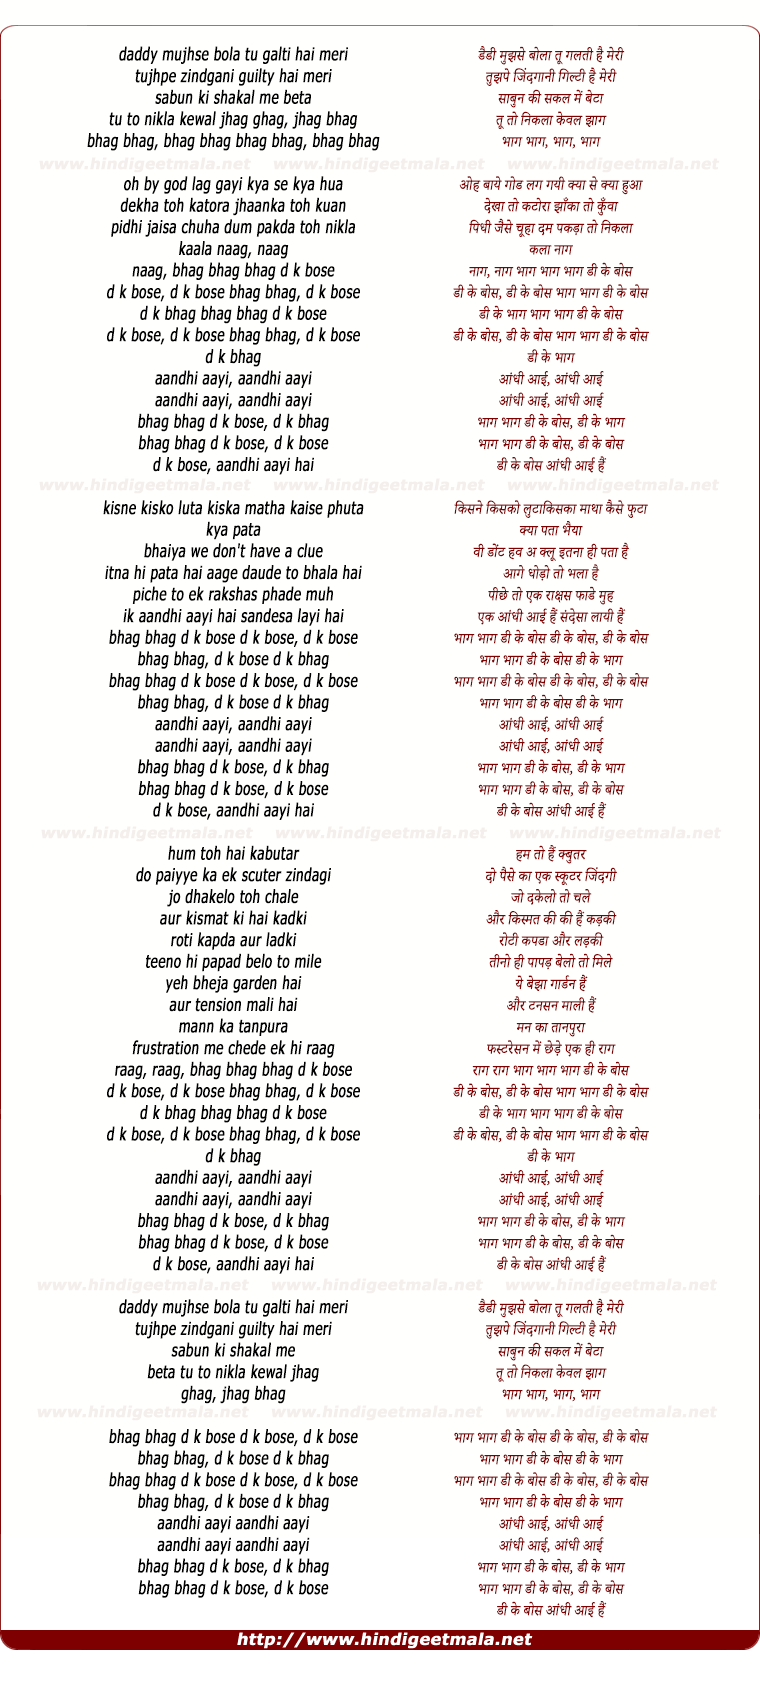 lyrics of song Bhaag Bhaag D K Bose, Aandhi Aayi